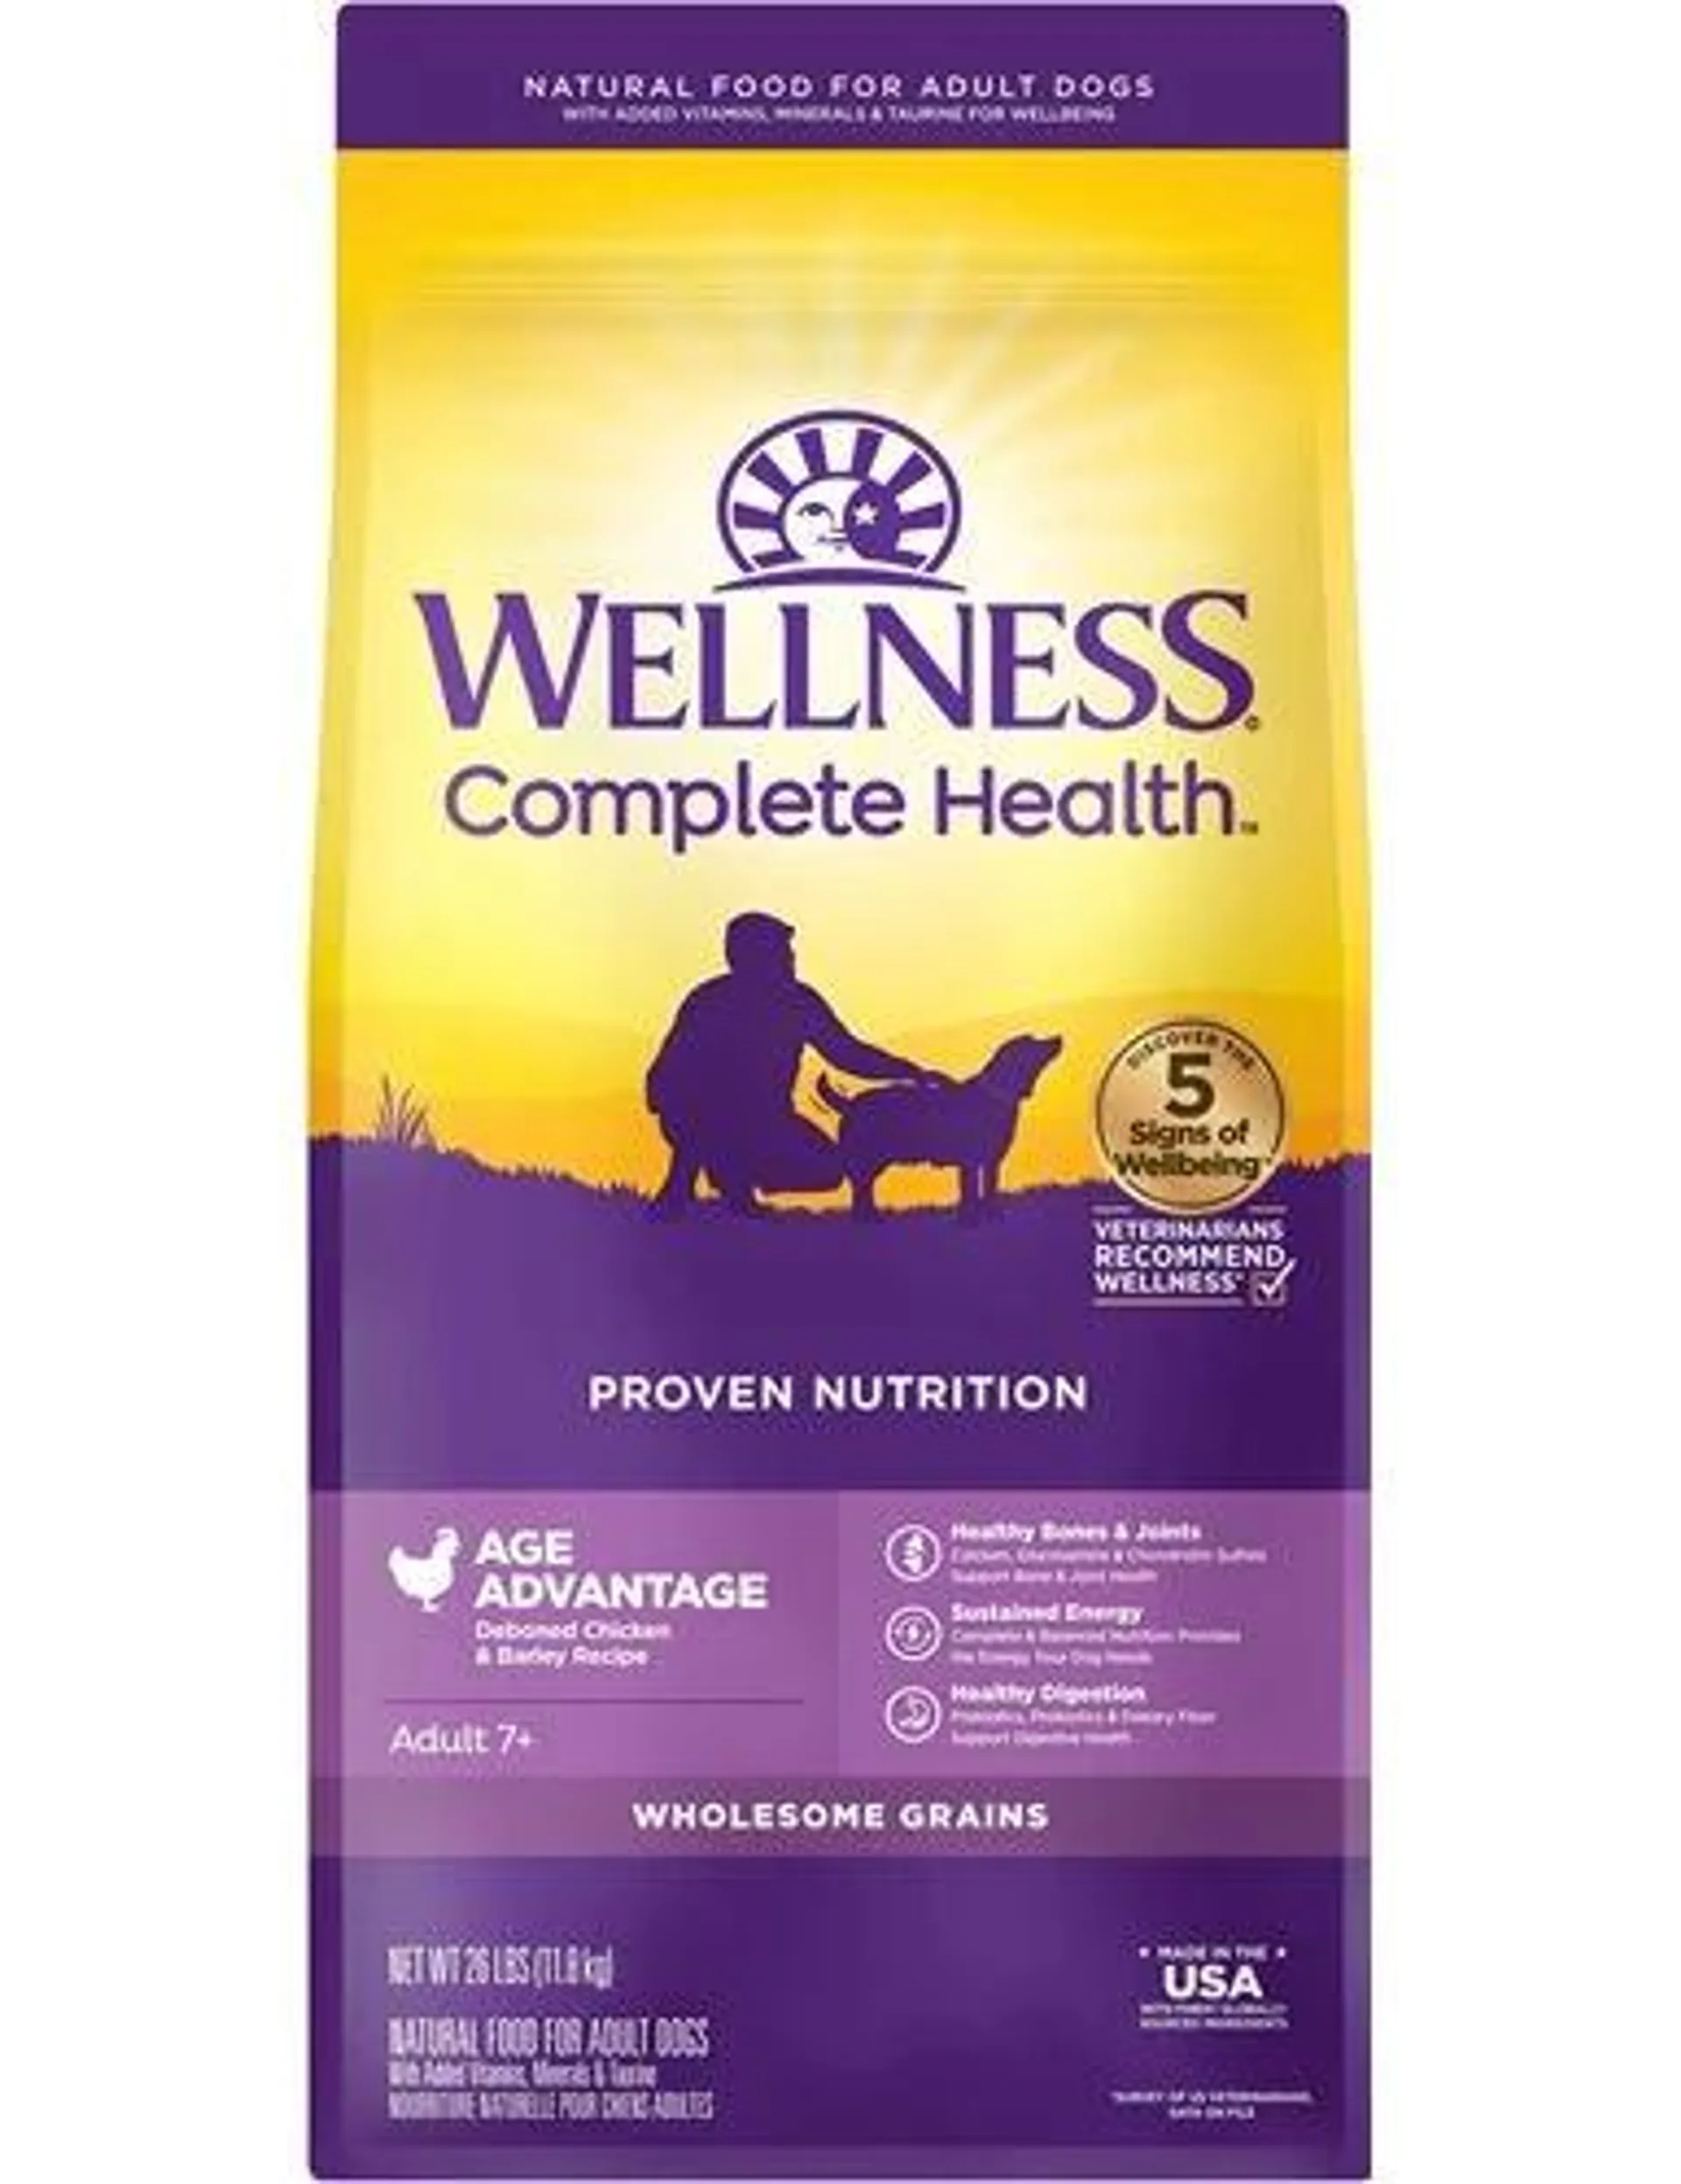 Wellness Complete Health Grained Senior Dry Dog Food, Age Advantage, Deboned Chicken & Barley Recipe, 26 Pound Bag